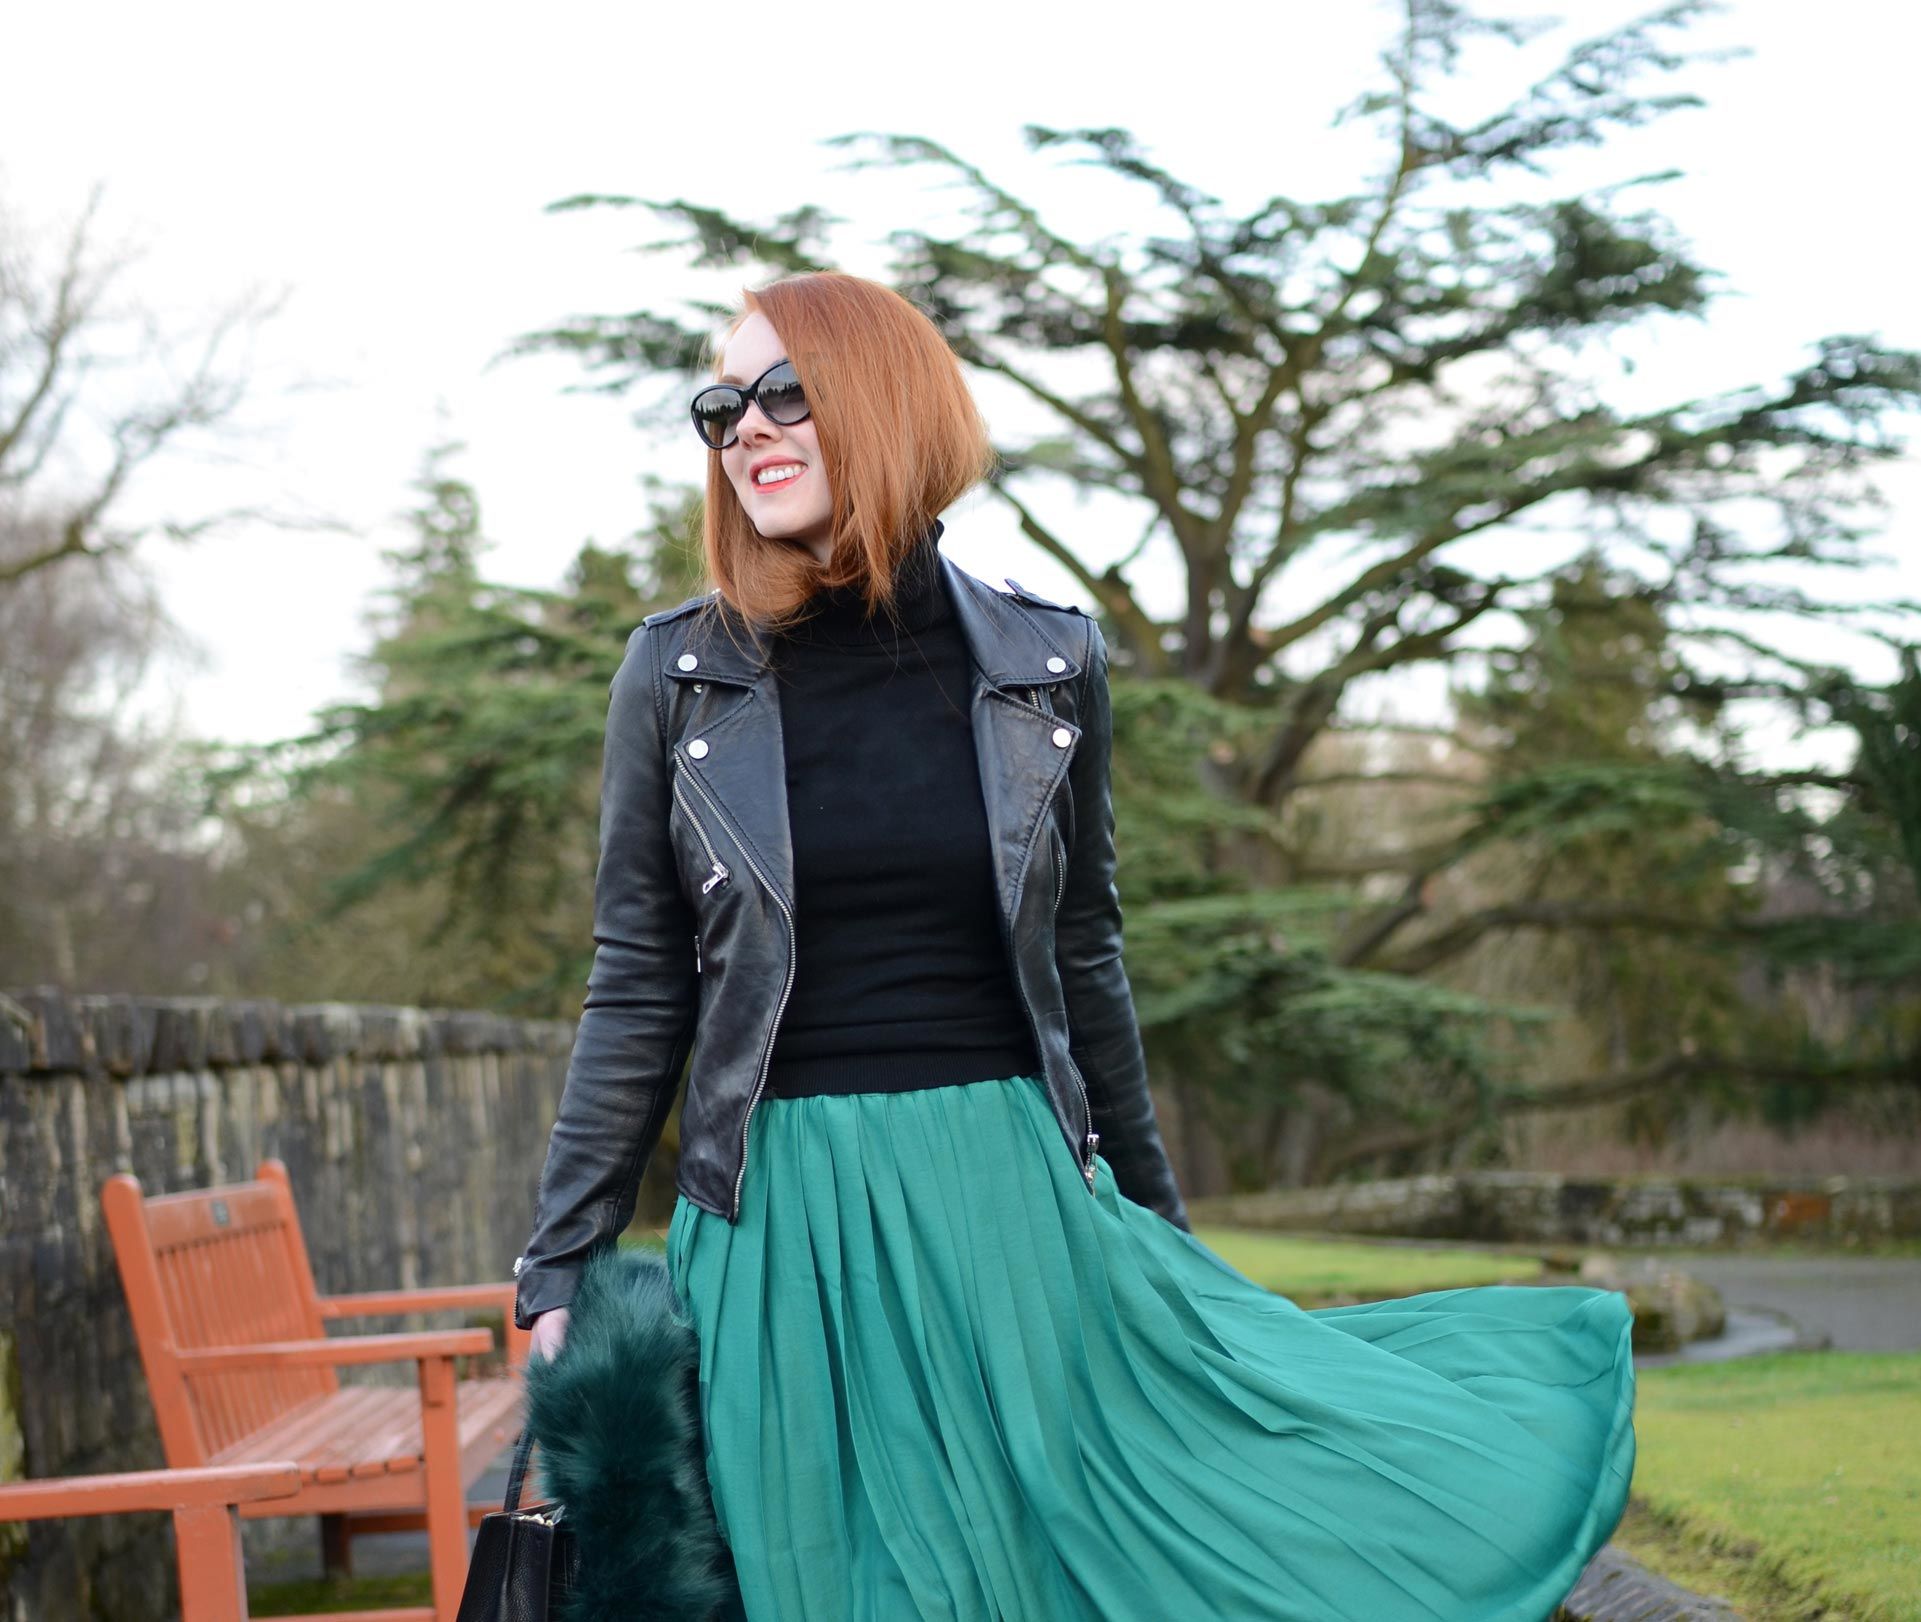 green pleated skirt